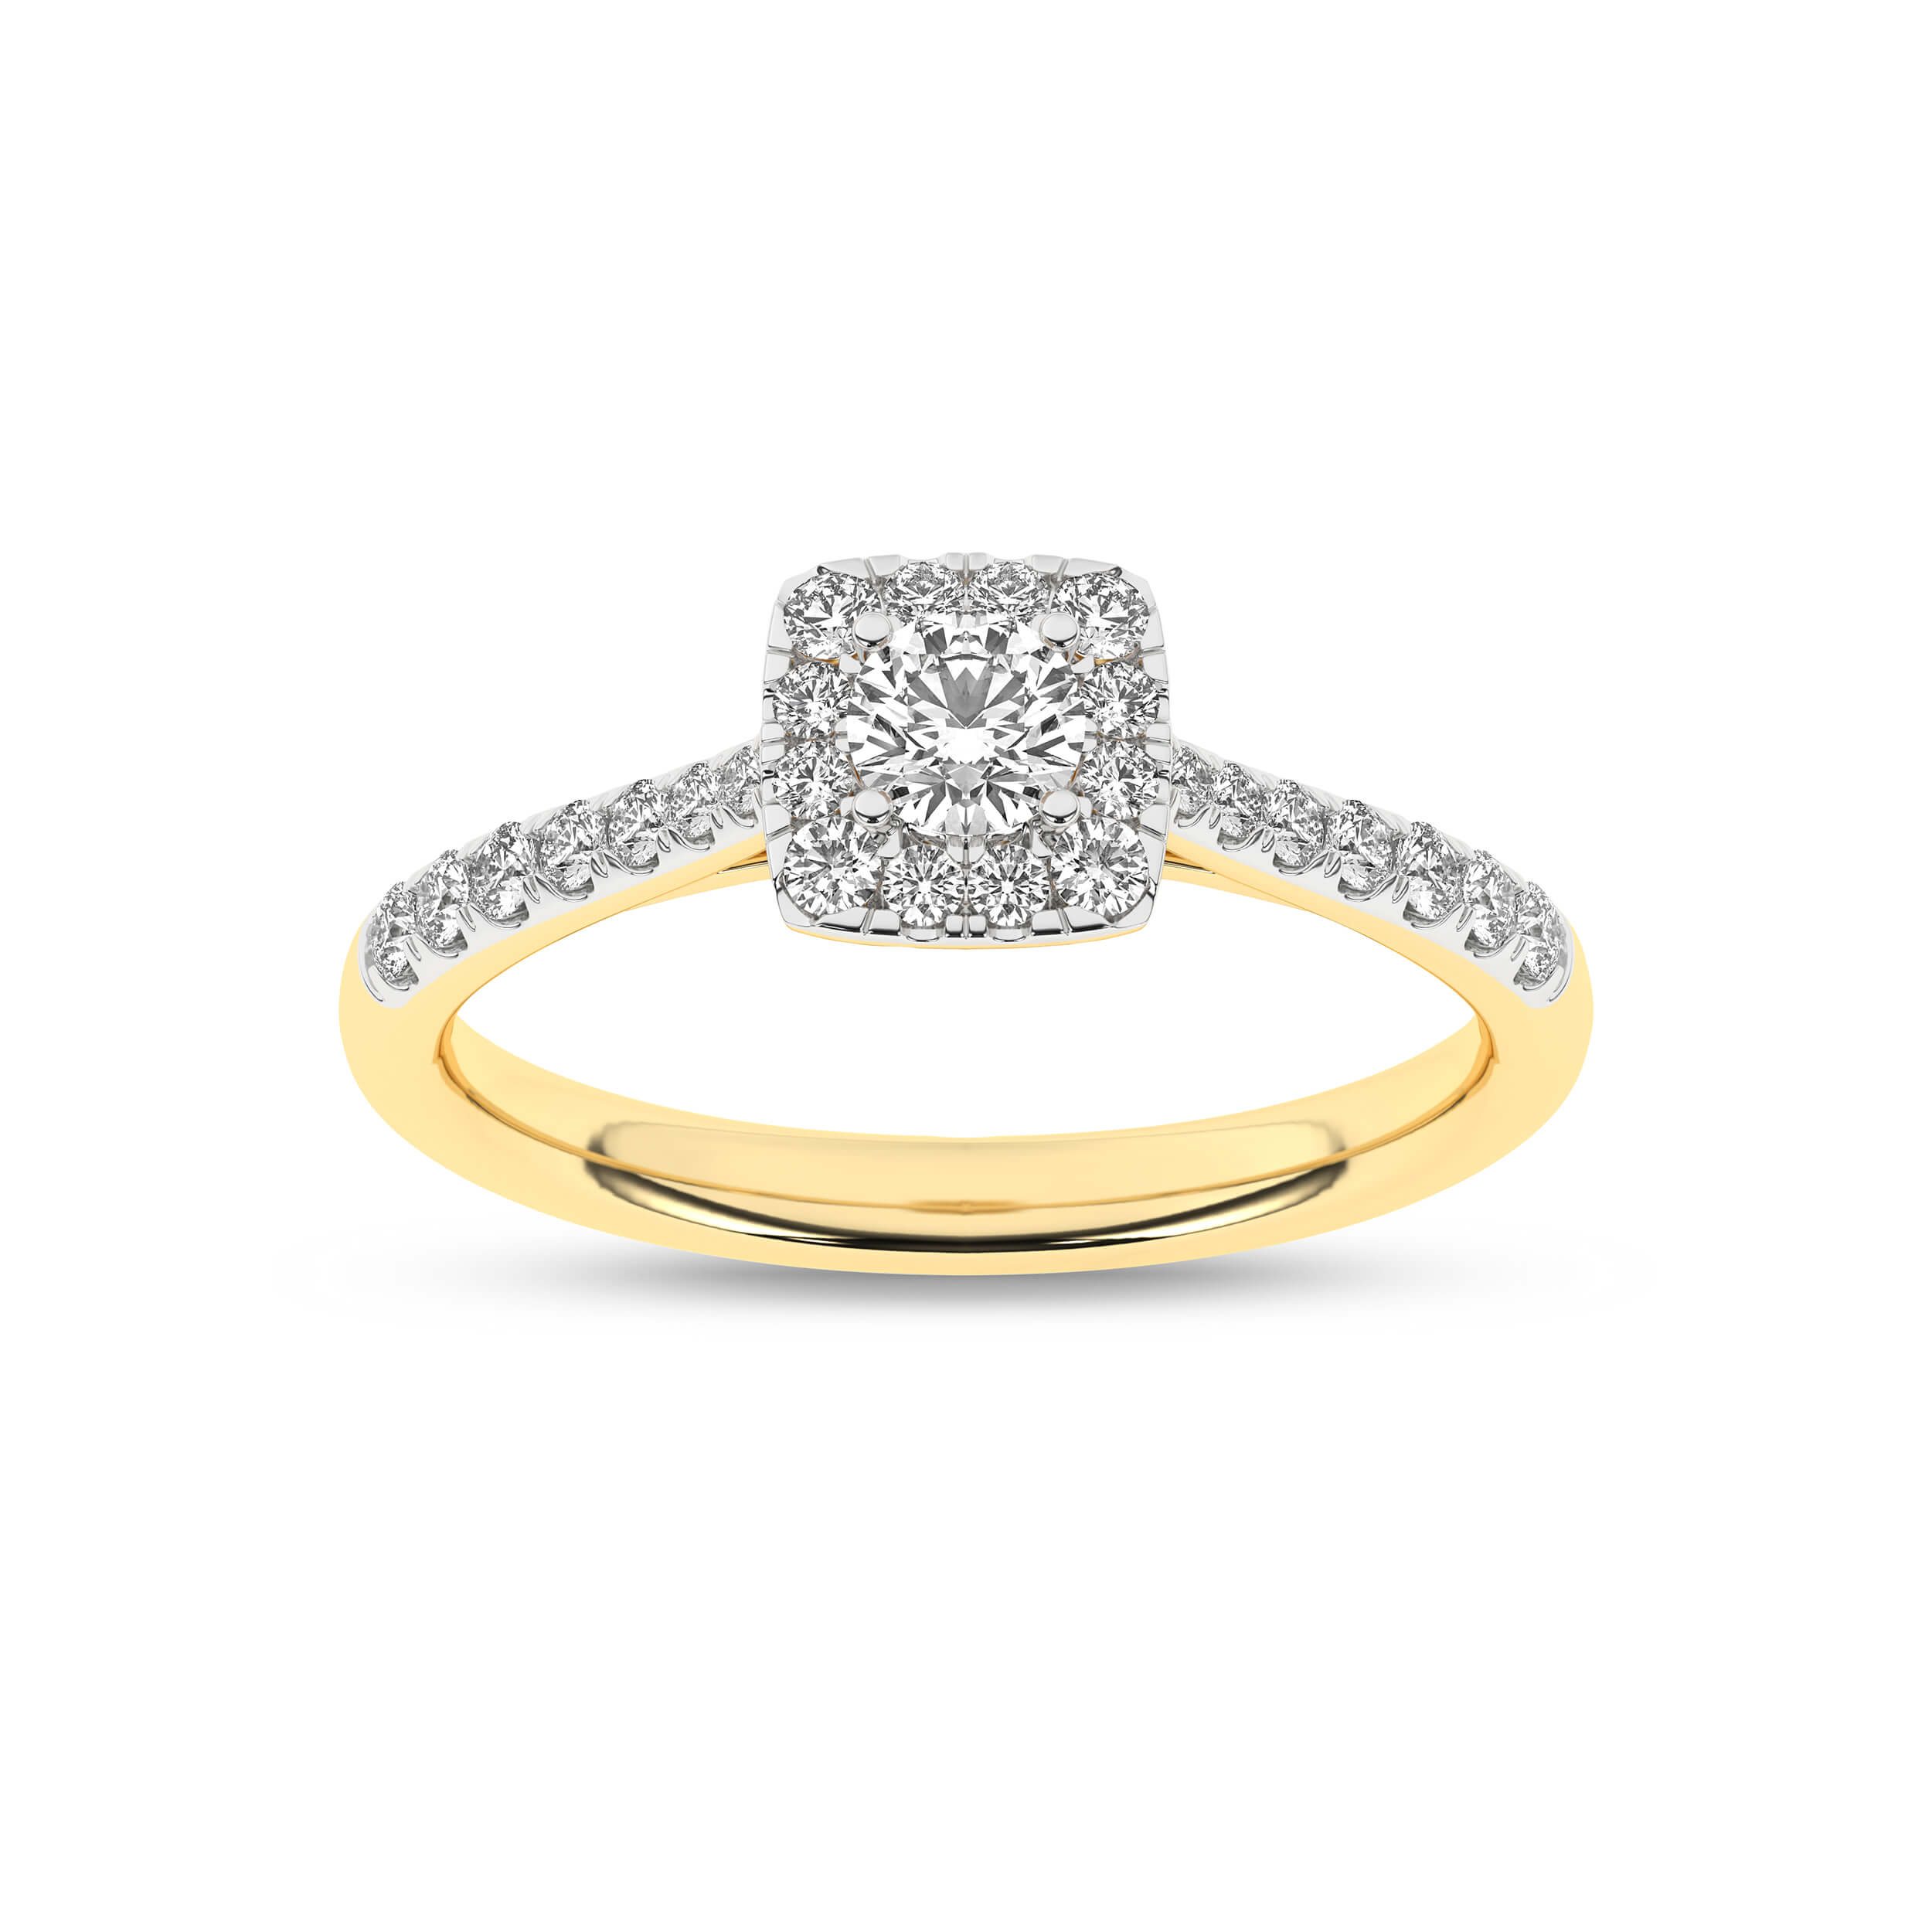 Inel de logodna din Aur Galben 14K cu Diamante 0.50Ct, articol RB17645EG, previzualizare foto 3